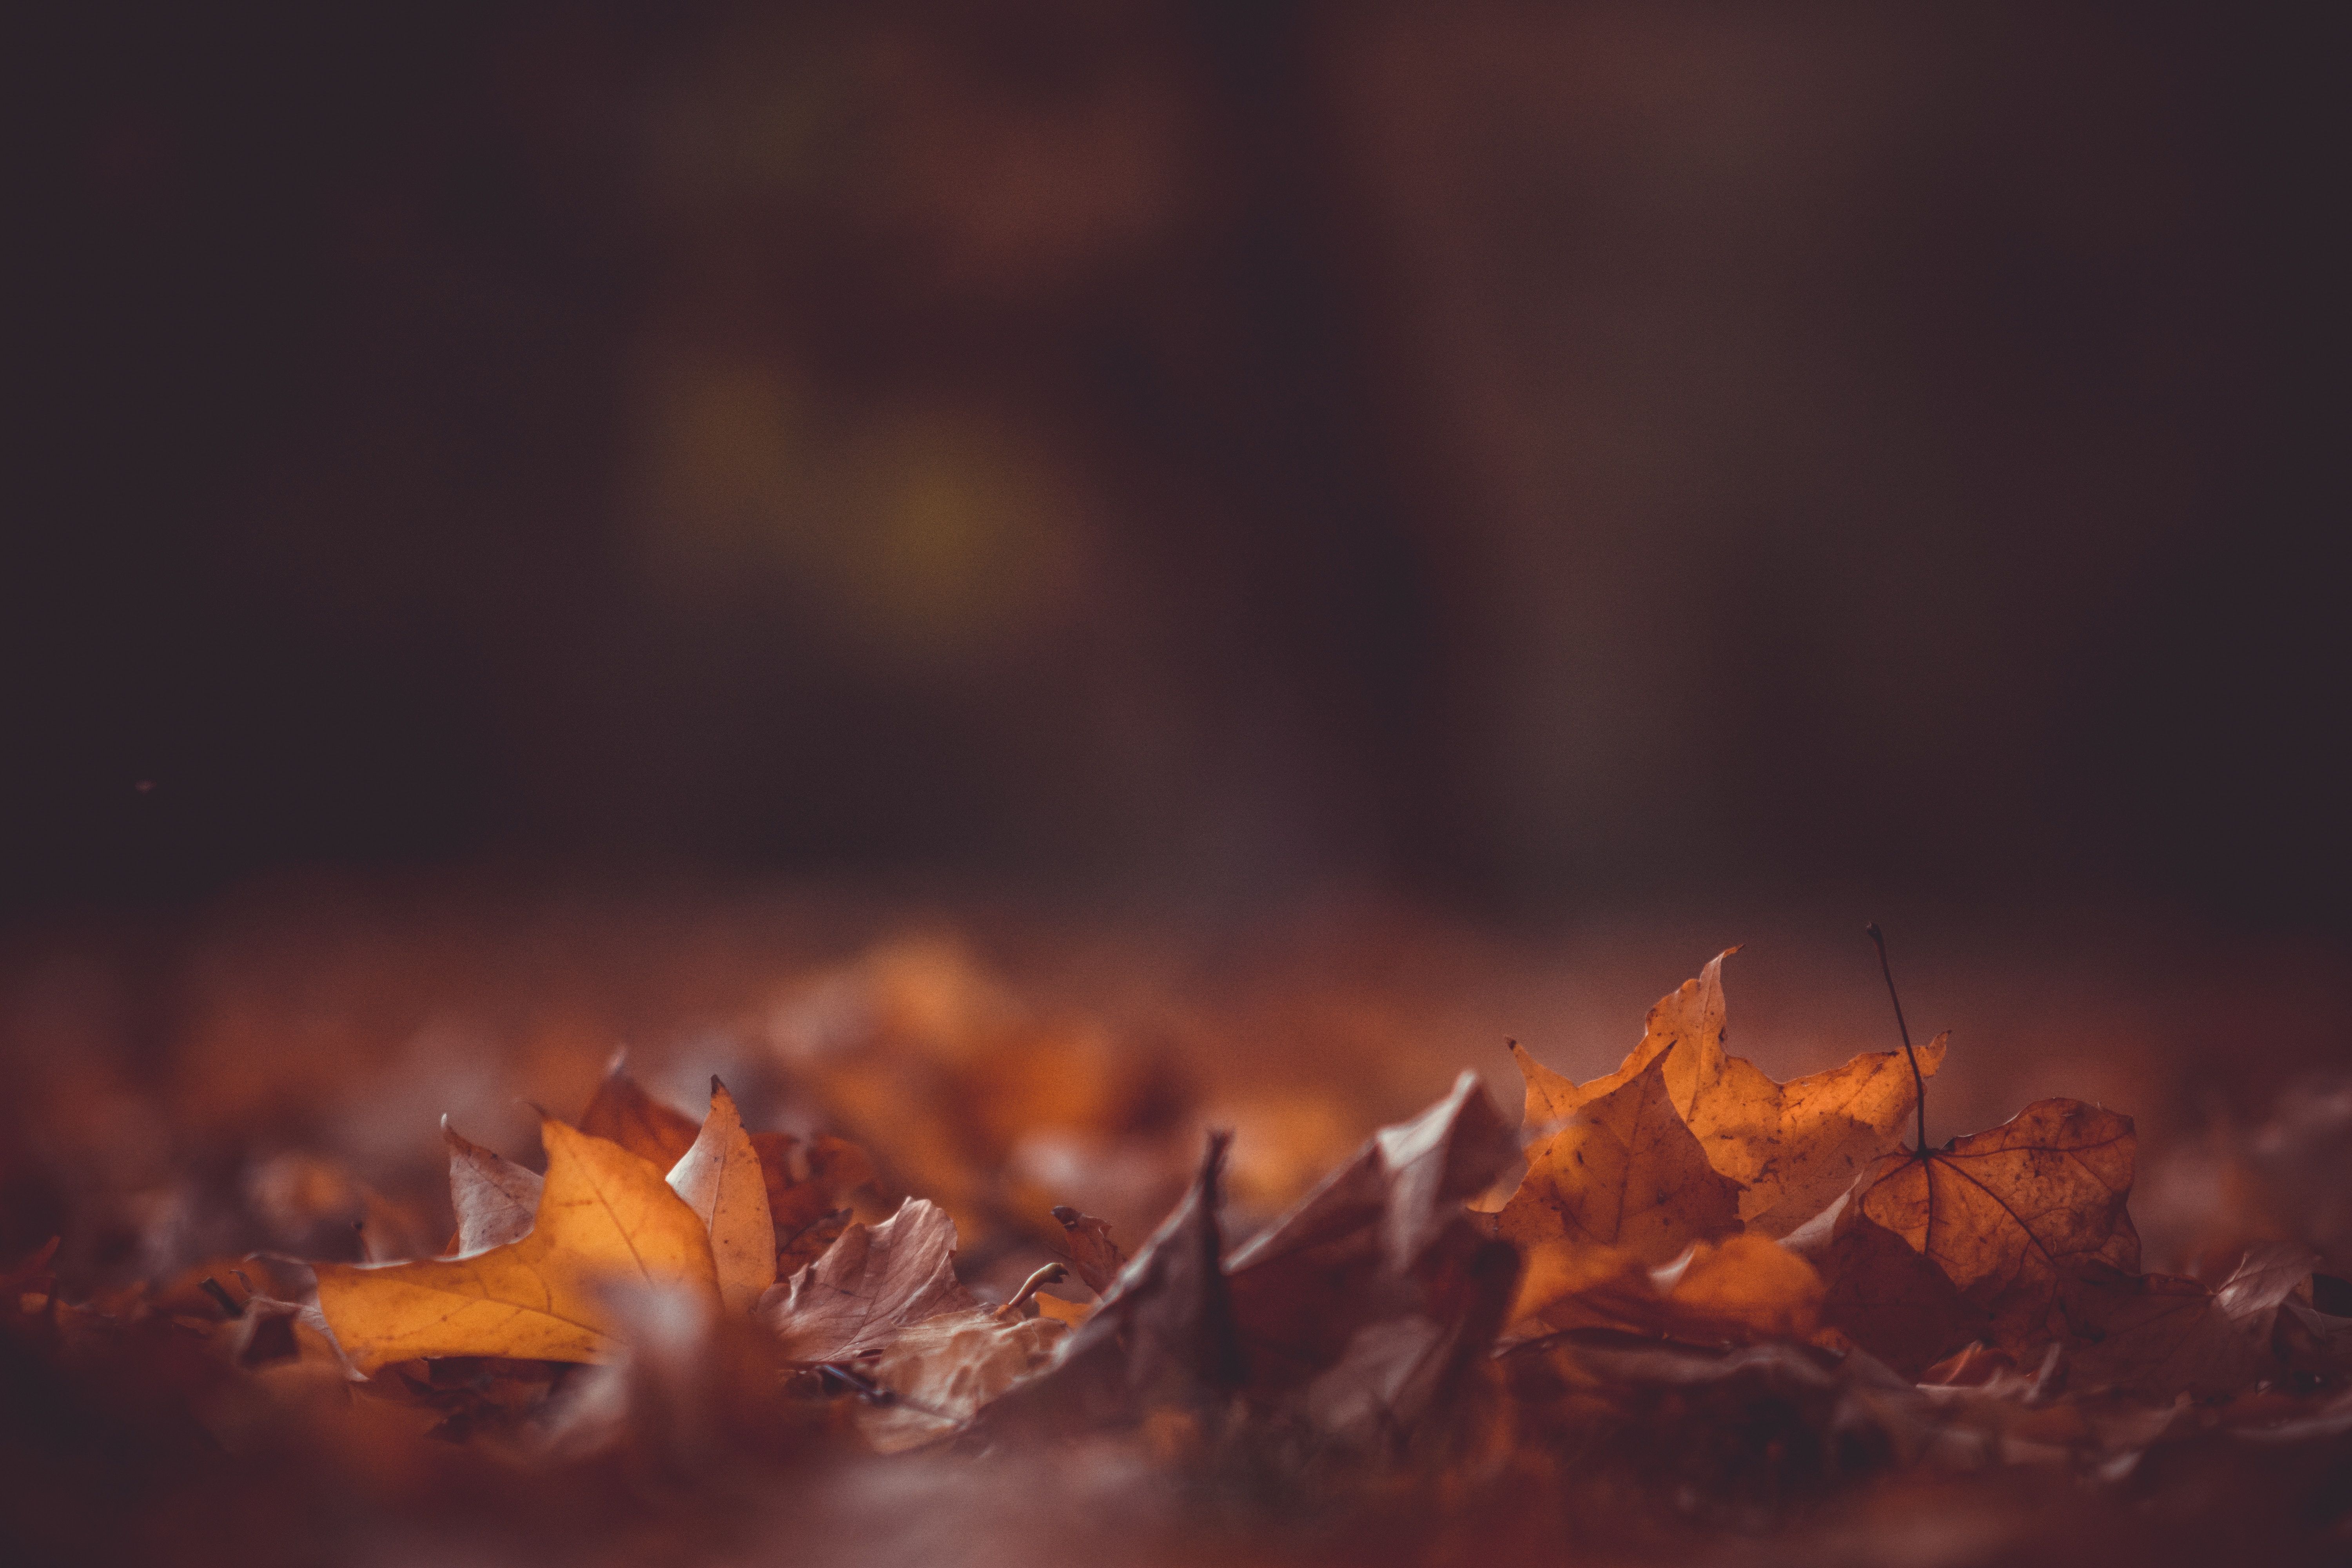 6000x4000 #wallpaper, #ground, #blury, #season, #pile, #bokeh, #Free image, #fall background, #dark, #forest, #leafe, #harvest, #fall, #moody, #blur, #autumn, #fall wallpaper, #red, #black, #orange, #leaf